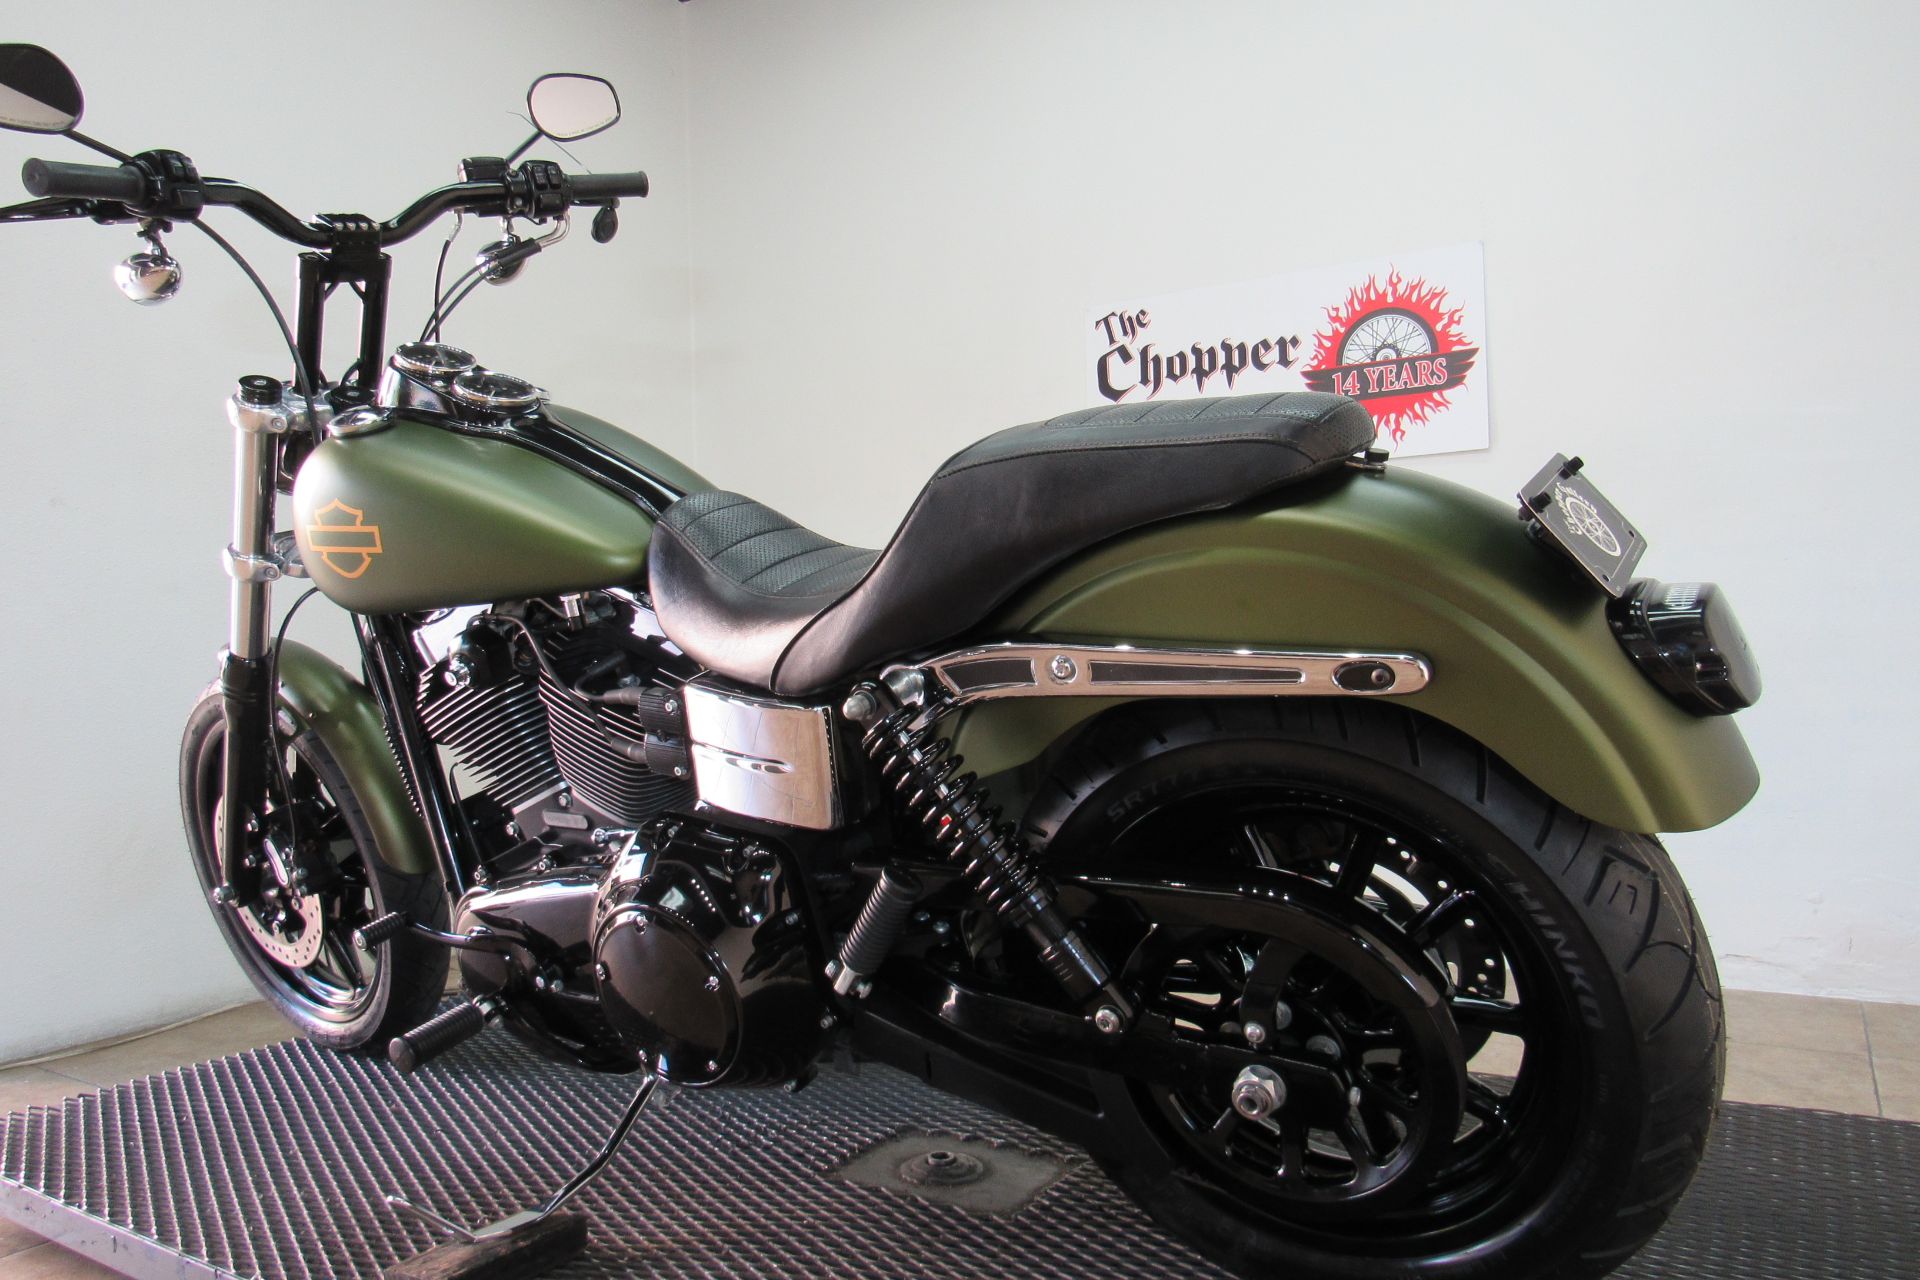 2014 Harley-Davidson Low Rider® in Temecula, California - Photo 31